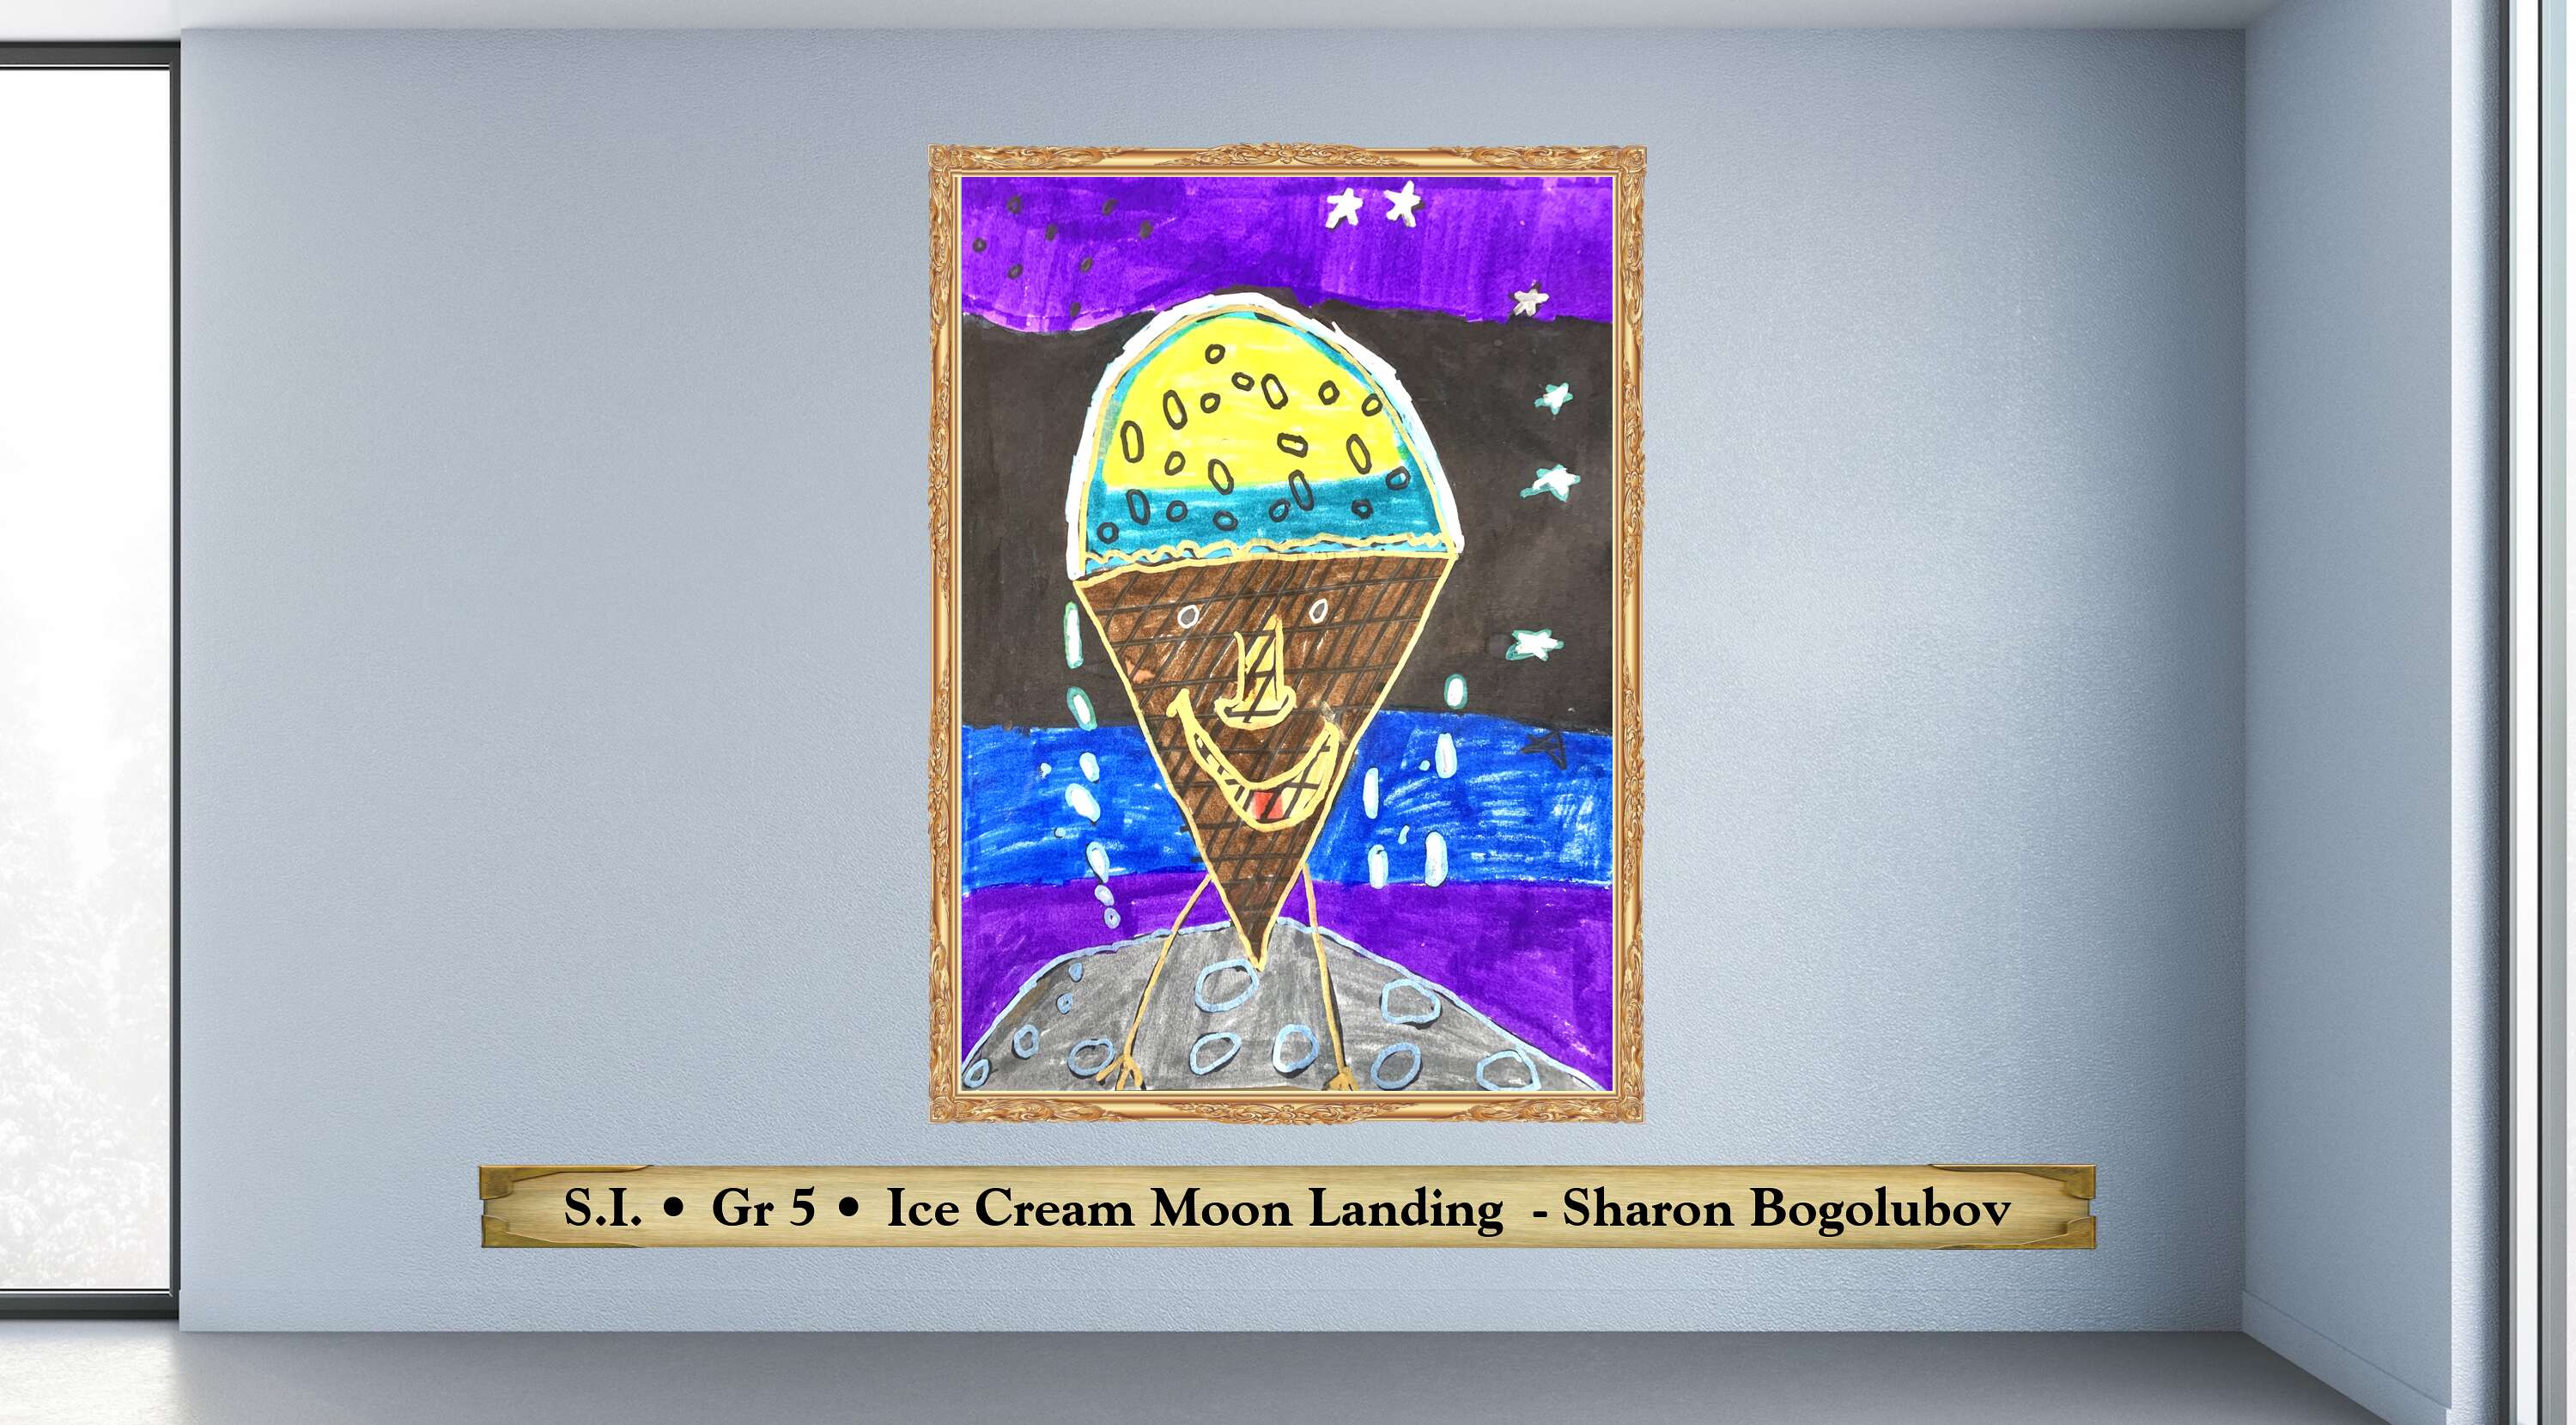 S.I. • Gr 5 • Ice Cream Moon Landing  - Sharon Bogolubov